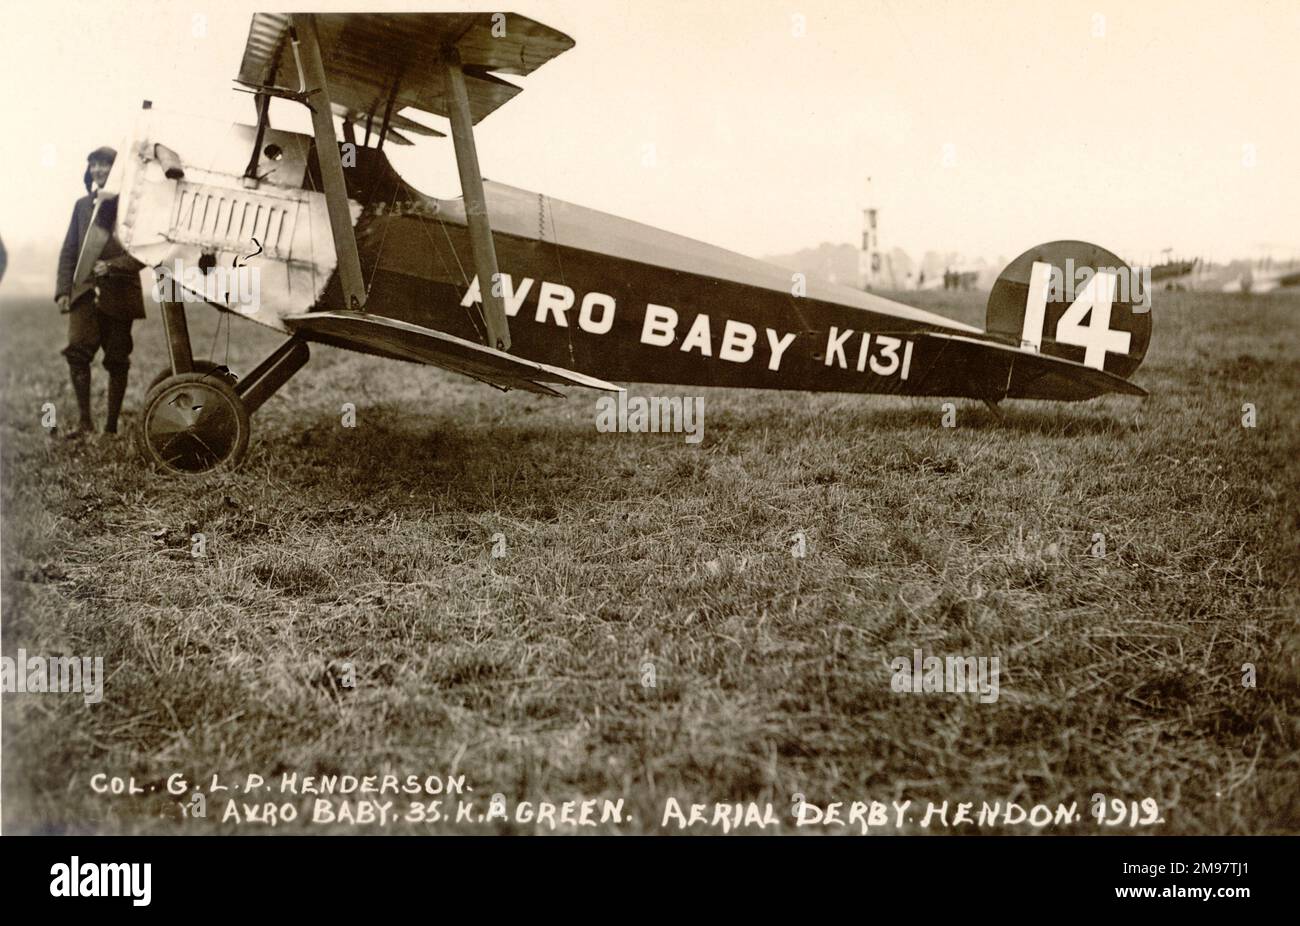 The second Avro 534 Baby, K-131. Stock Photo